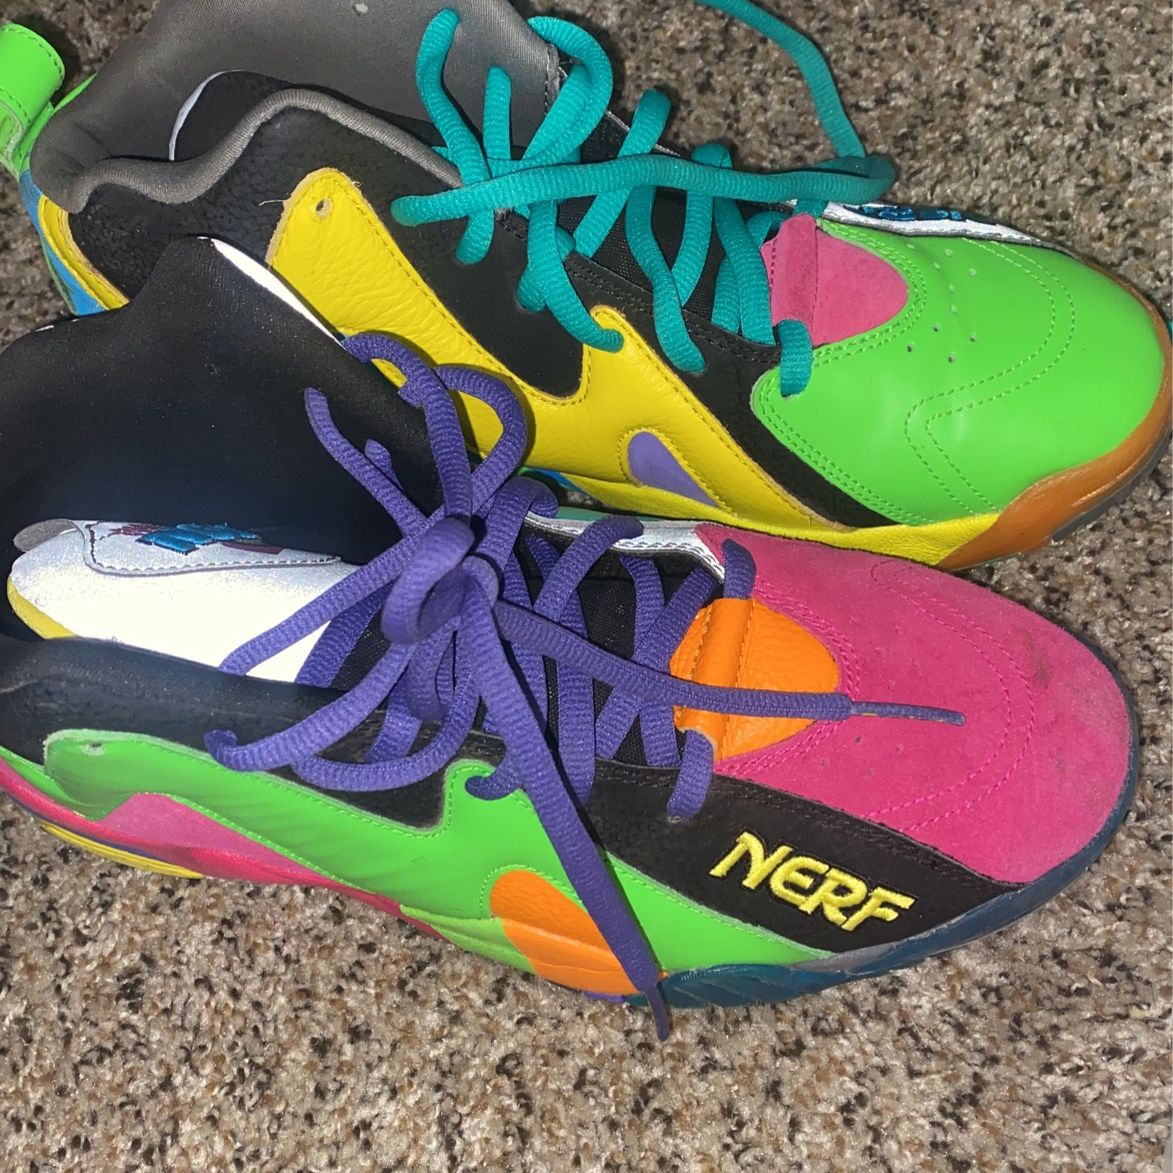 Nerf x Reebok Basketball Shoes 